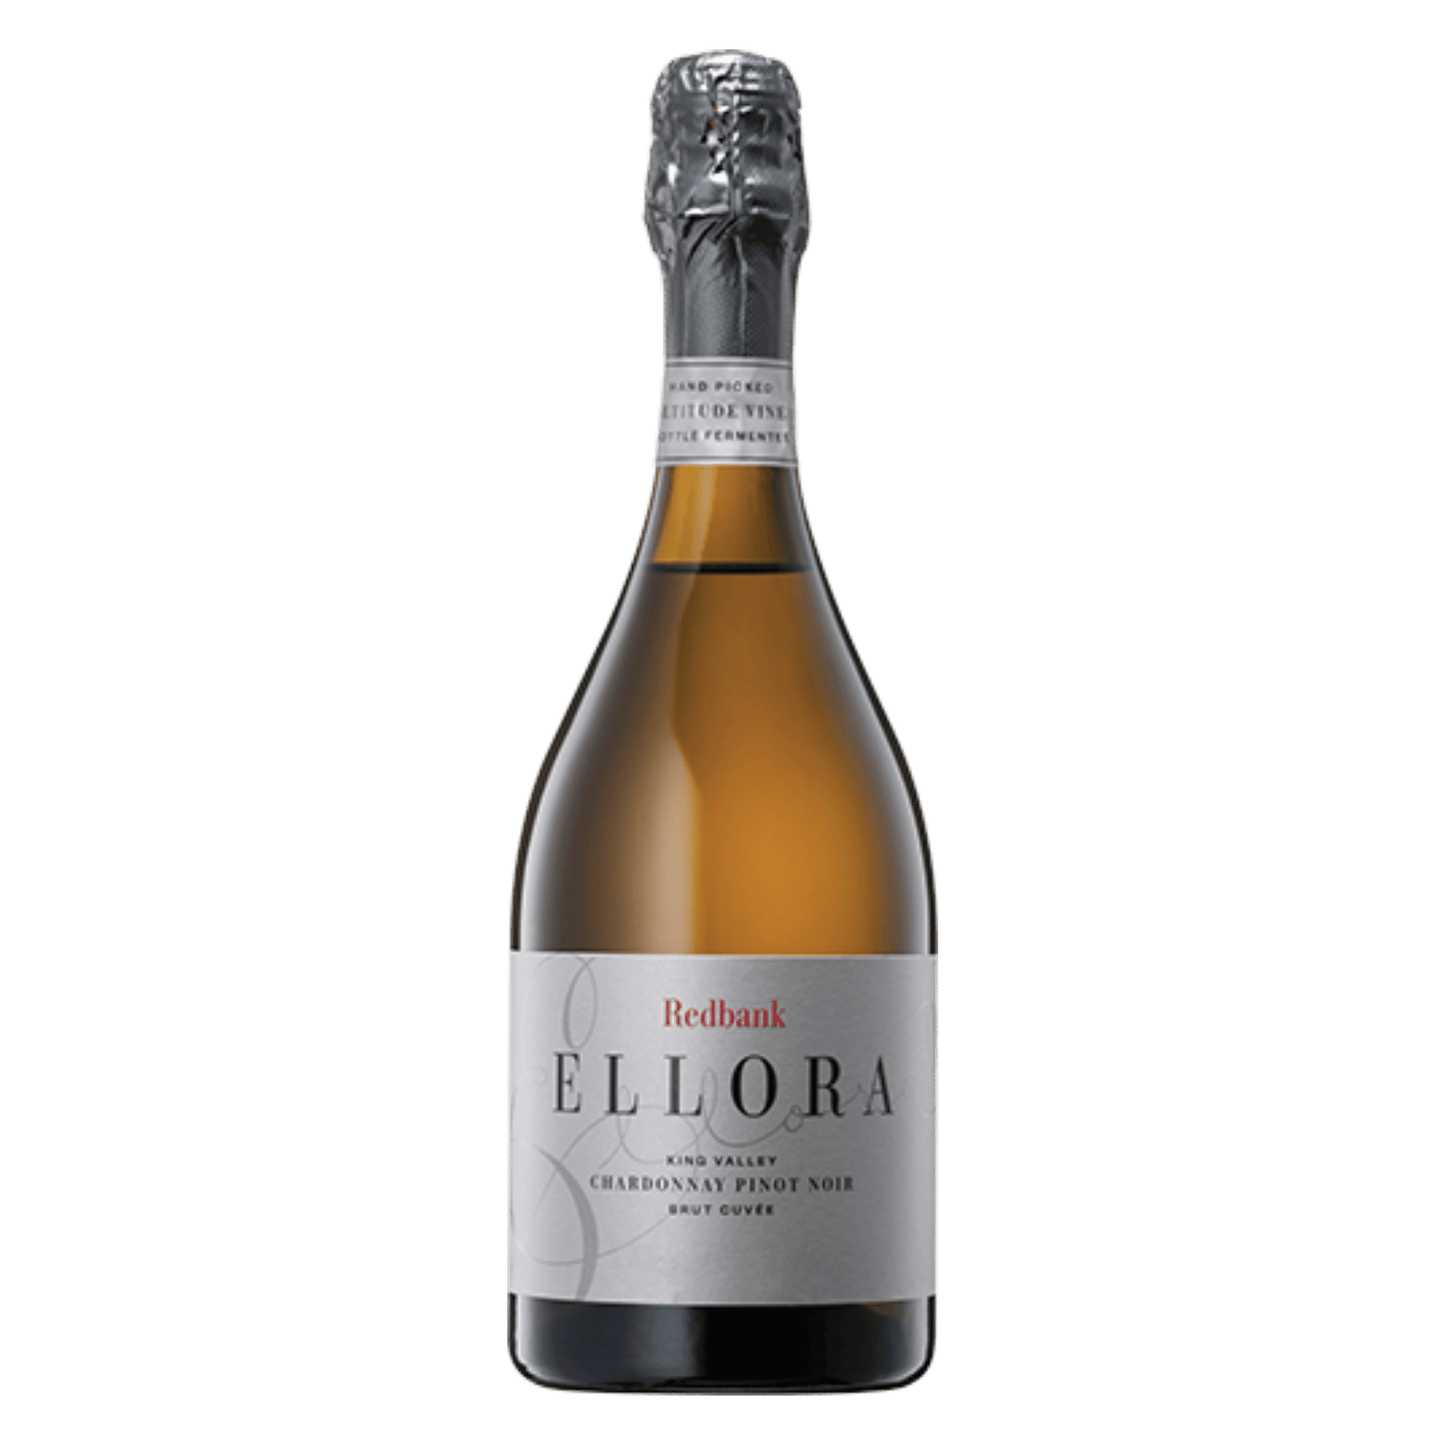 Redbank Ellora Vintage Chardonnay Pinot Noir (Prosecco Rosé) 2016